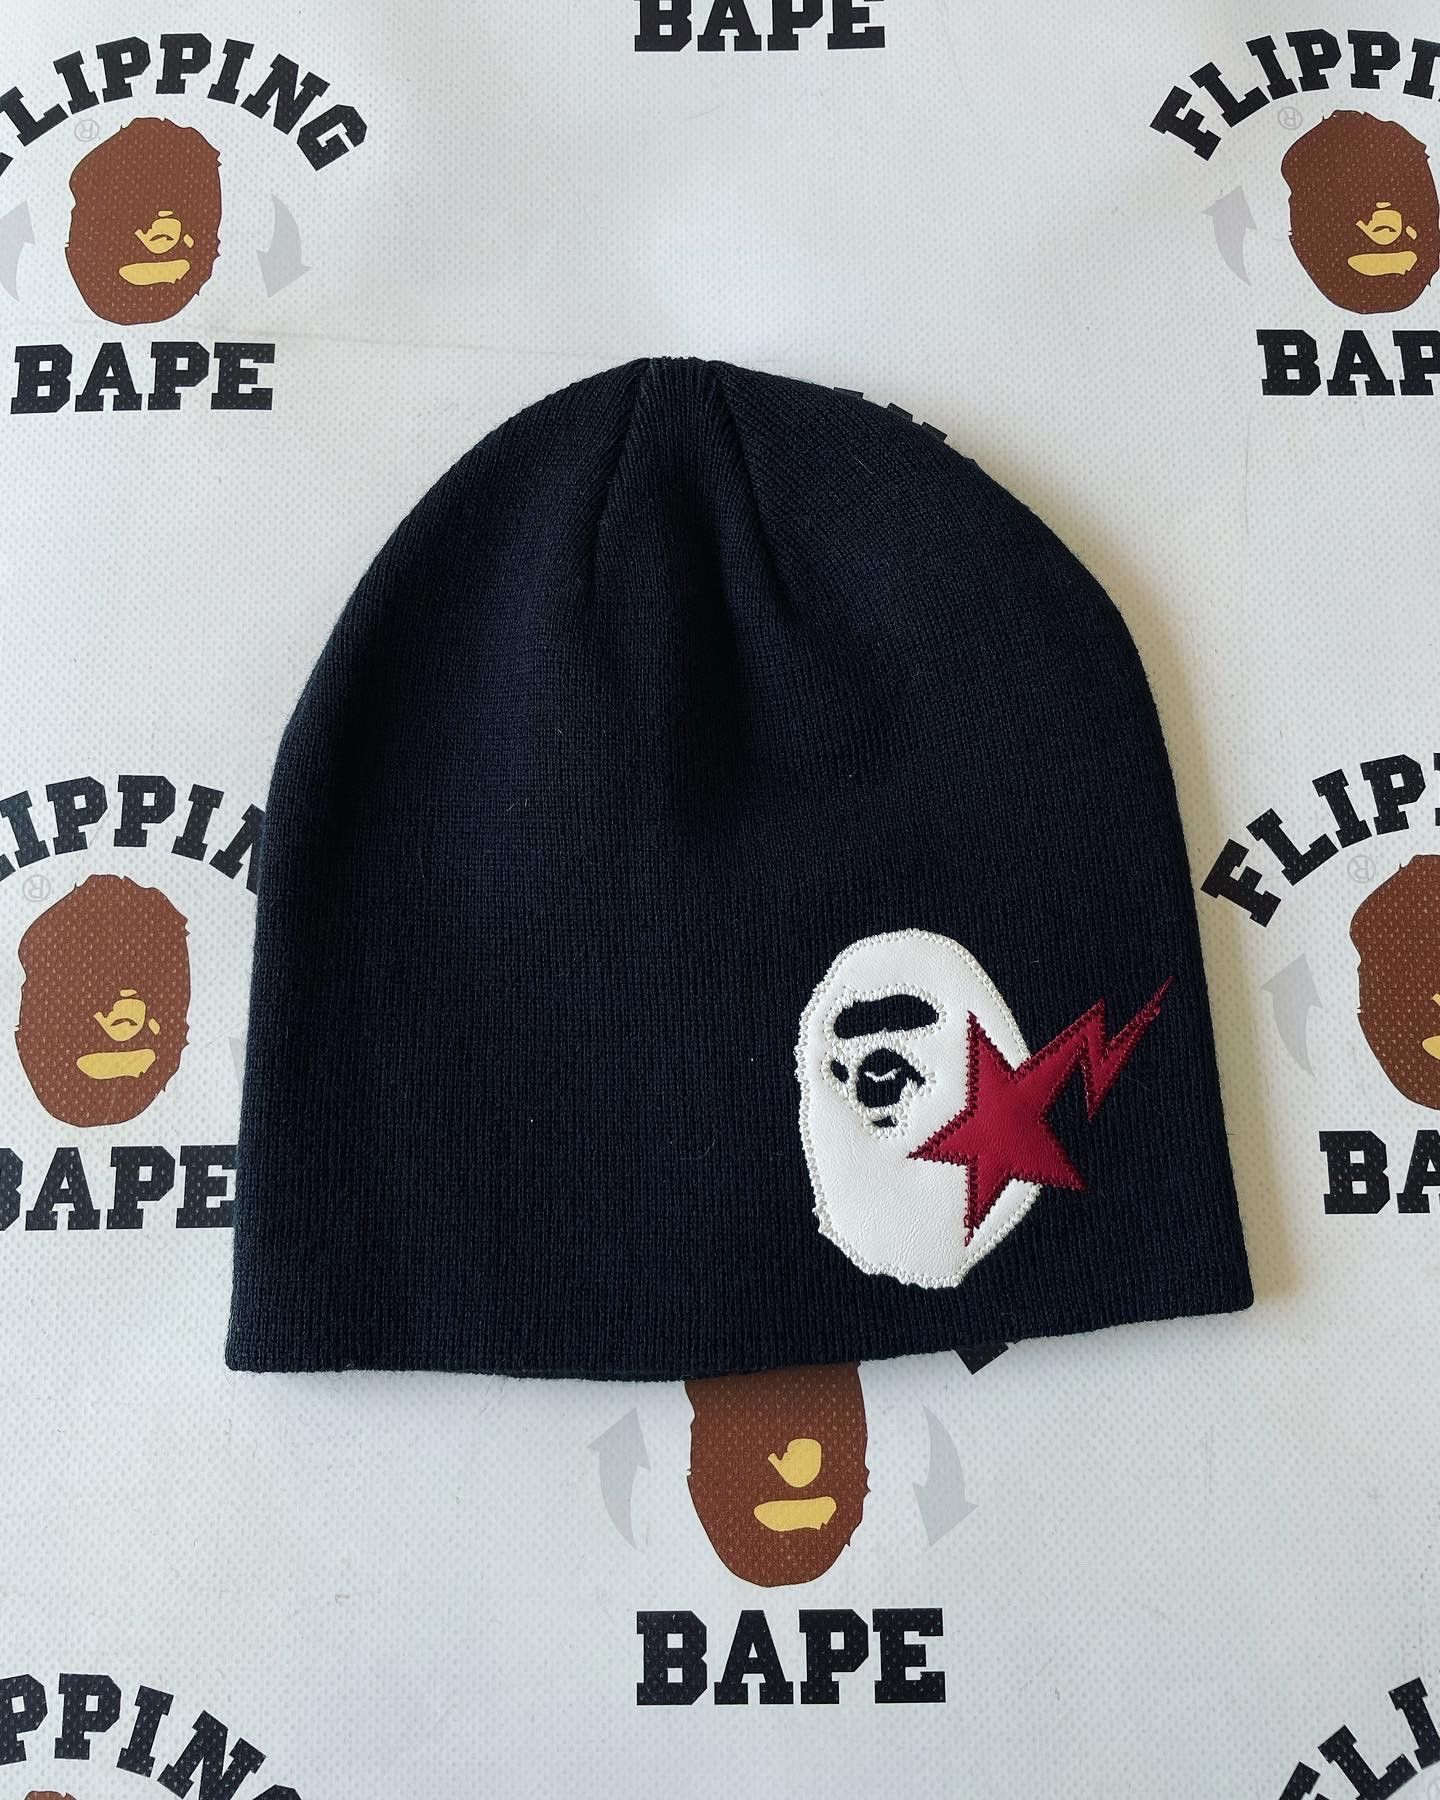 Bape BAPE STA APE HEAD LEATHER PATCHED KNIT CAP | Grailed